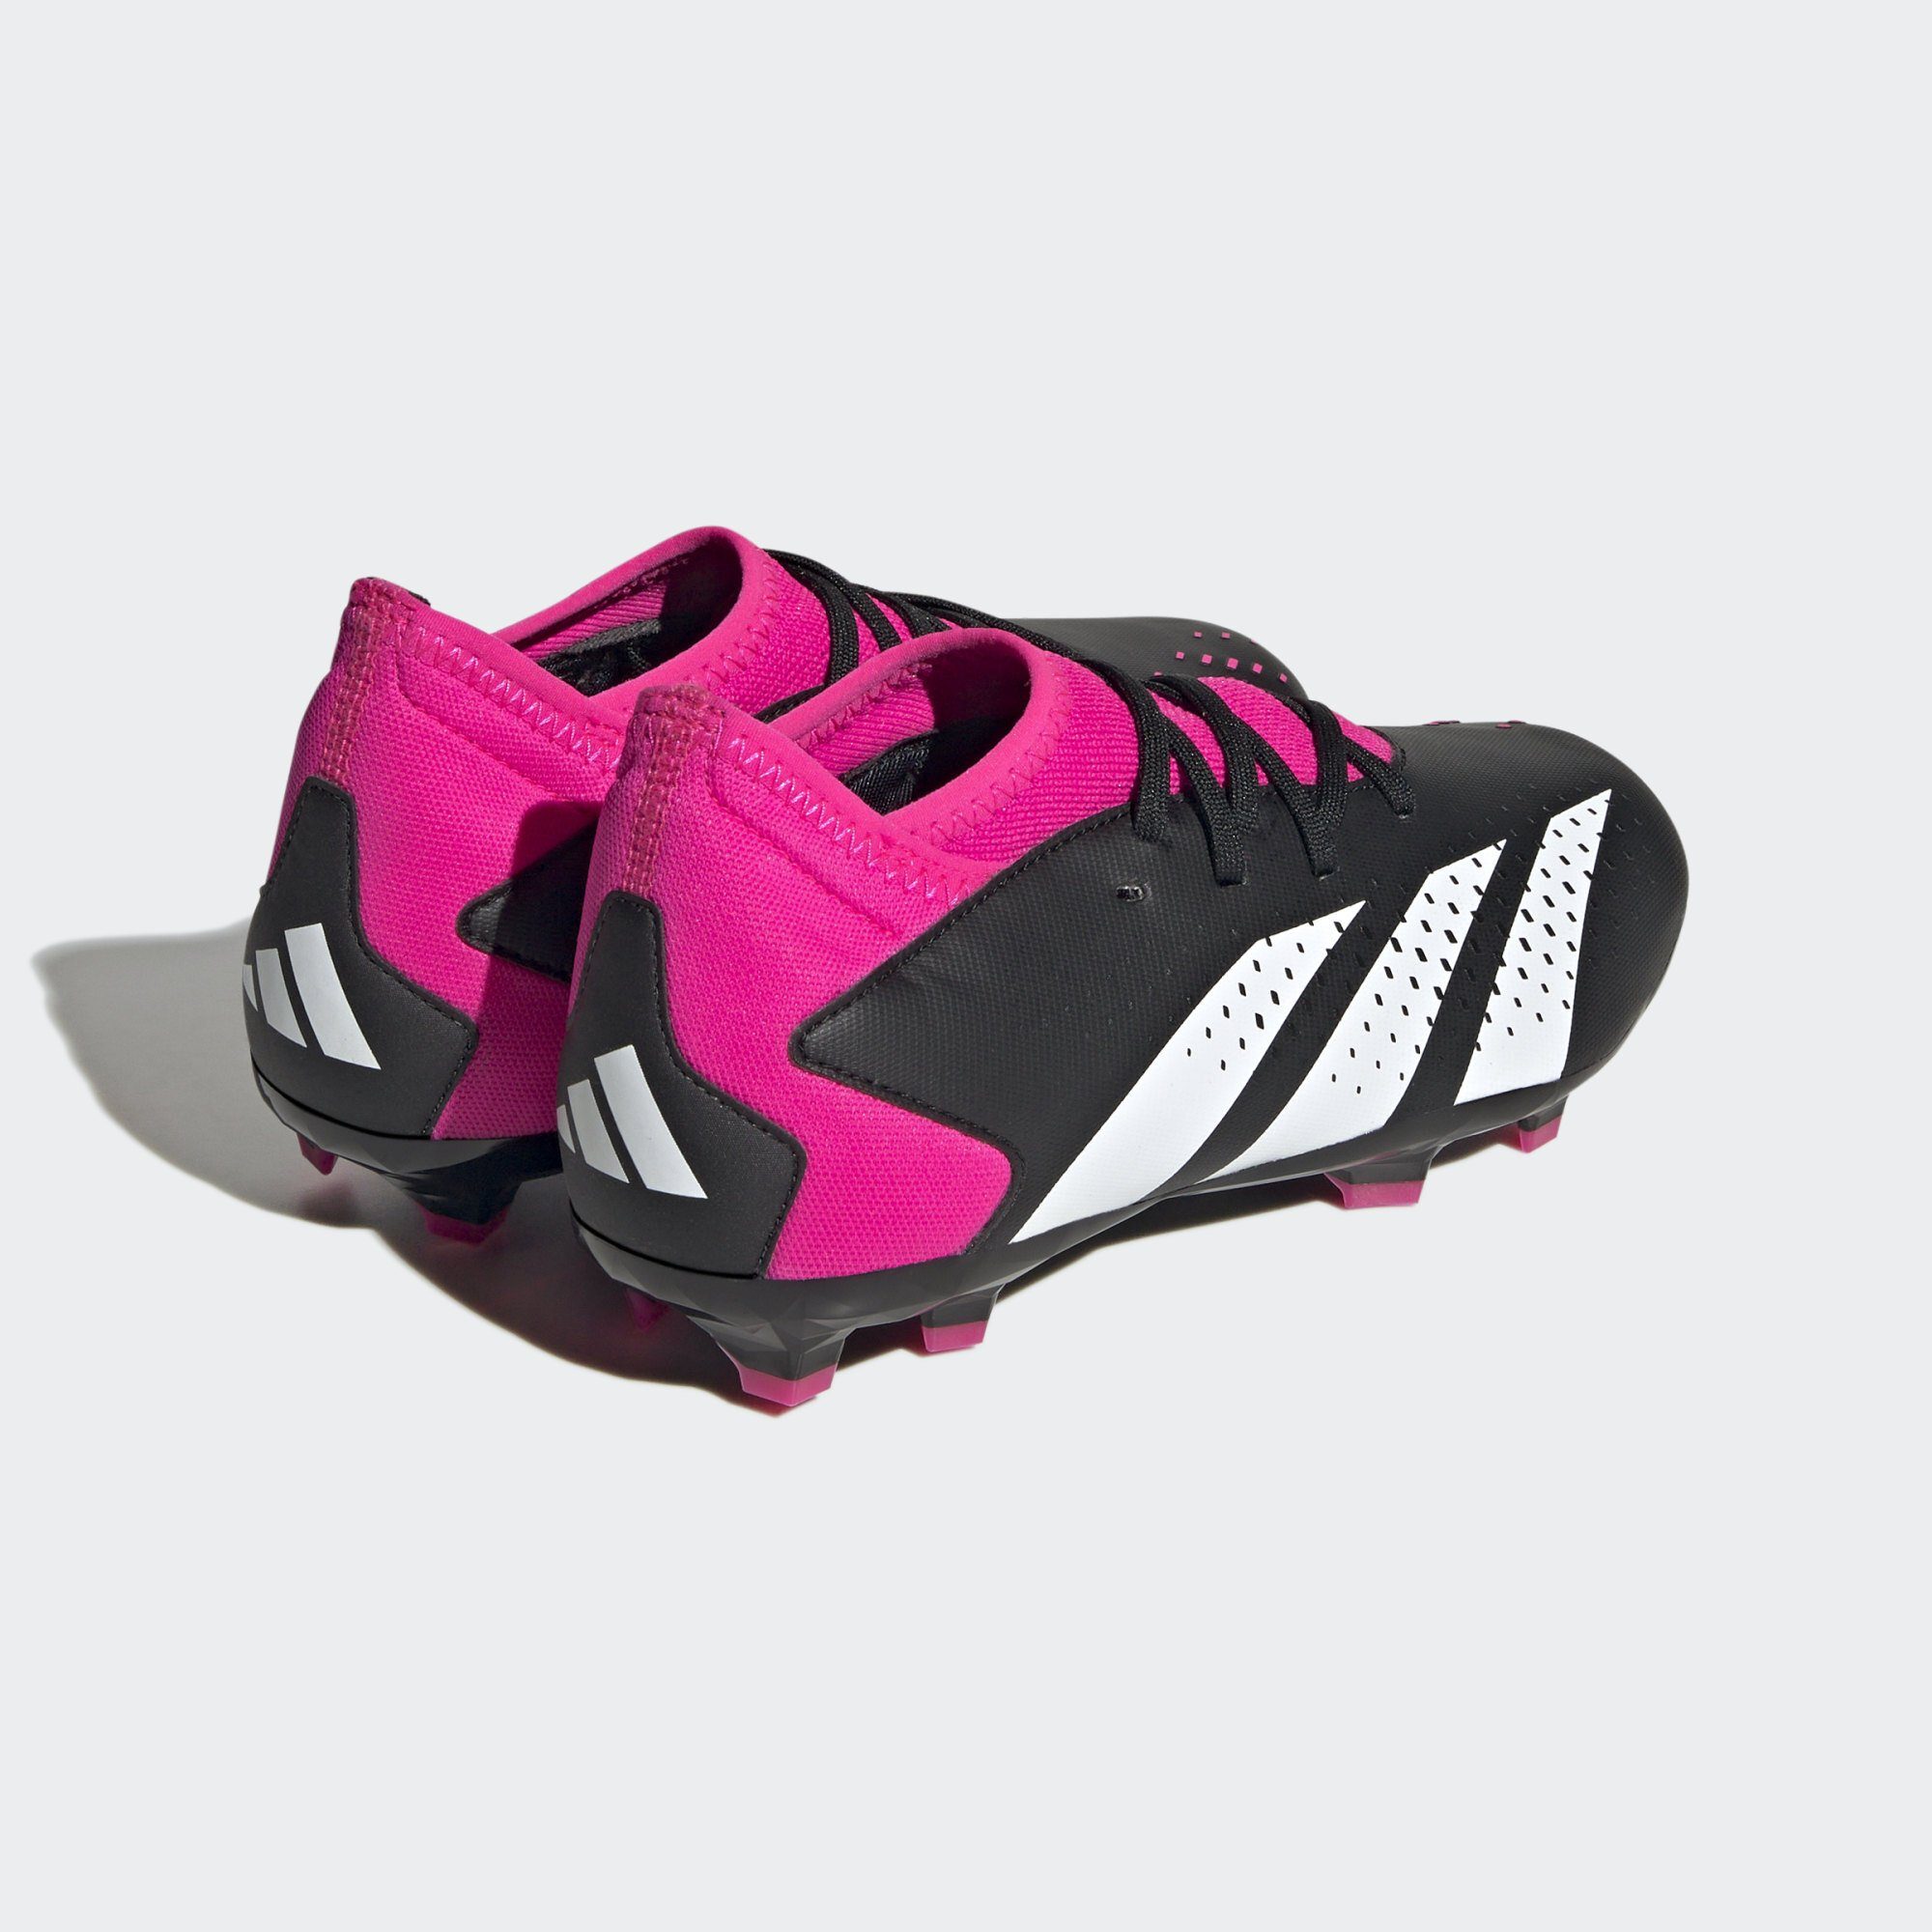 adidas / Cloud PREDATOR / Pink Fußballschuh Black FG White Performance Team FUSSBALLSCHUH 2 Core ACCURACY.3 Shock